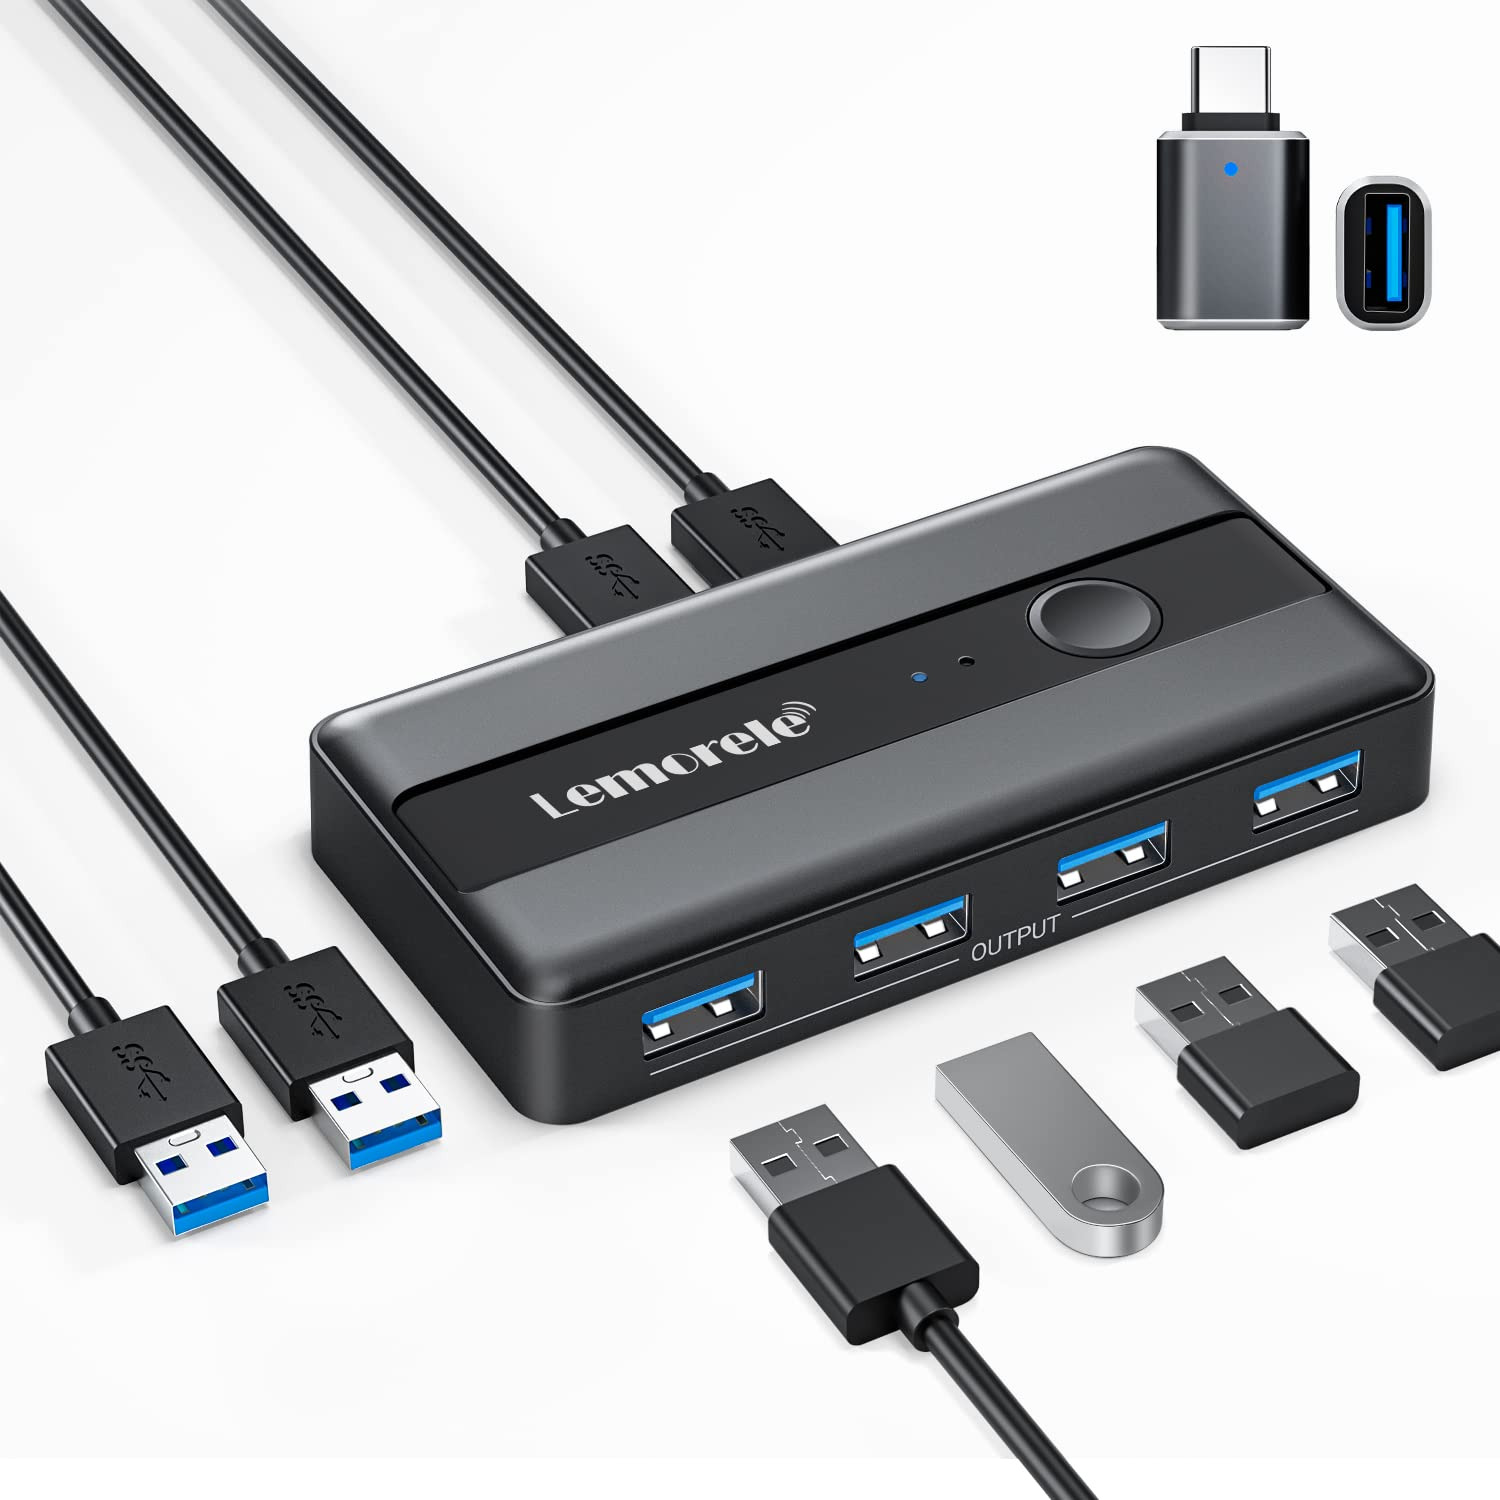 Lemorele USB 3.0 Switch Selector 2 Computers Sharing 4 USB Devices 4-Port USB